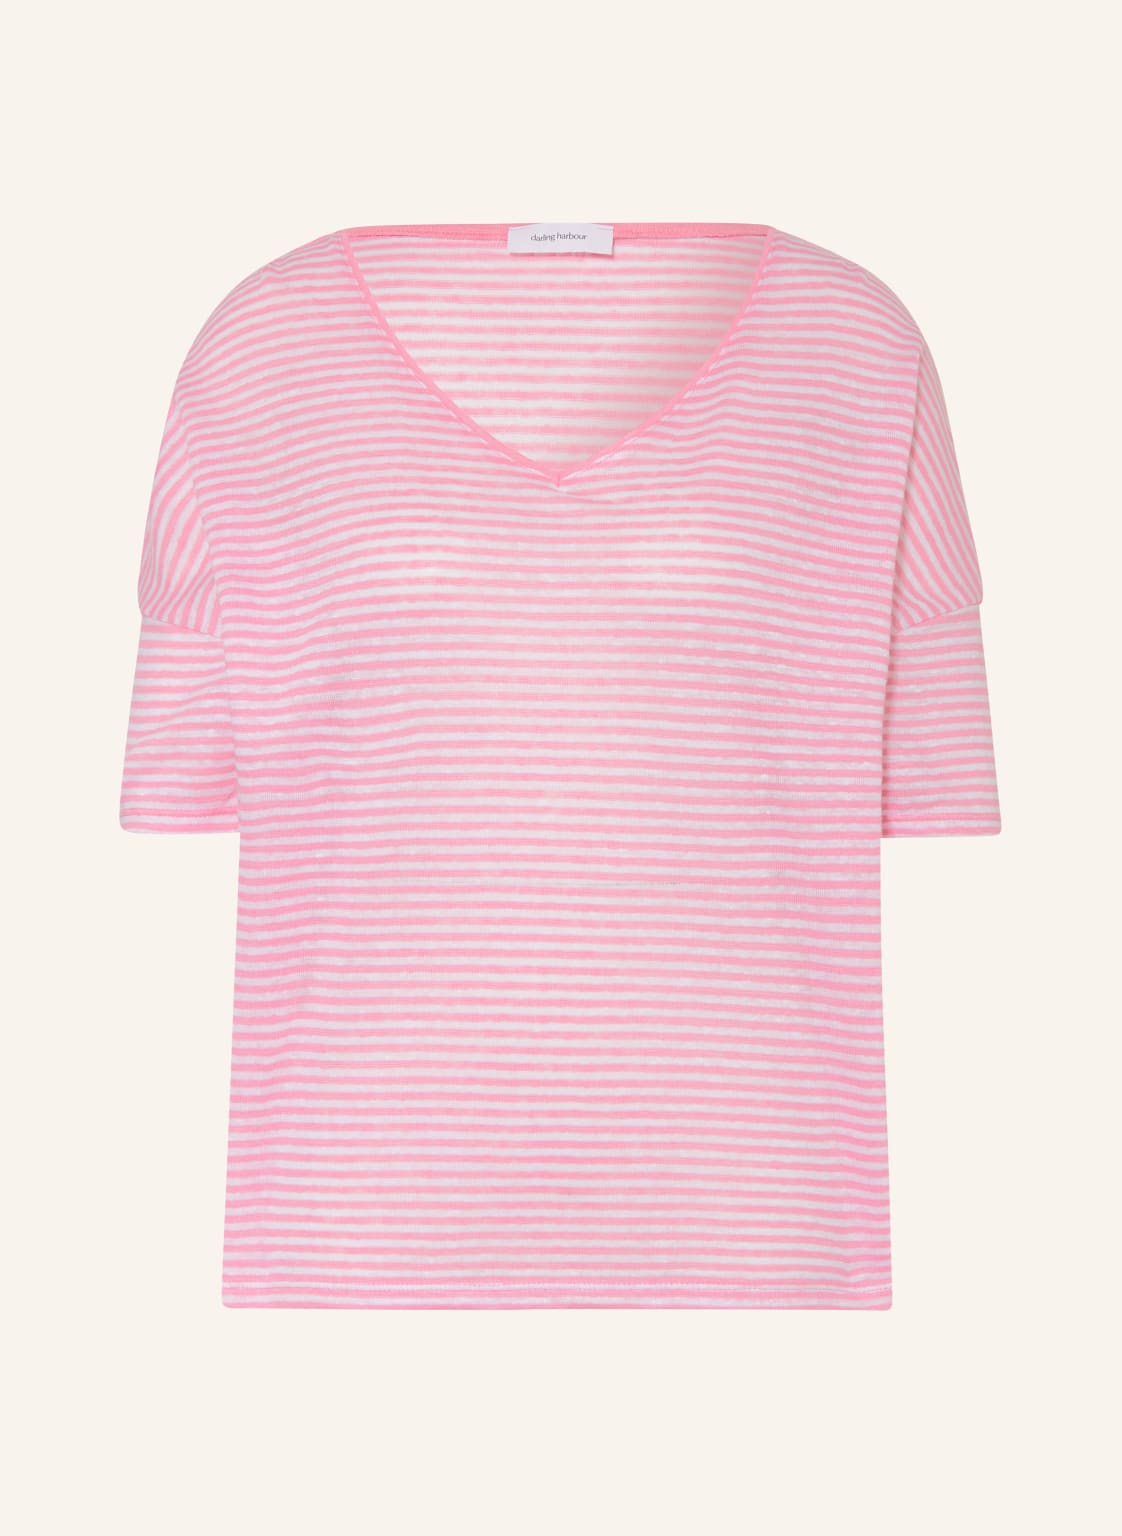 Darling Harbour T-Shirt Aus Leinen rosa von darling harbour